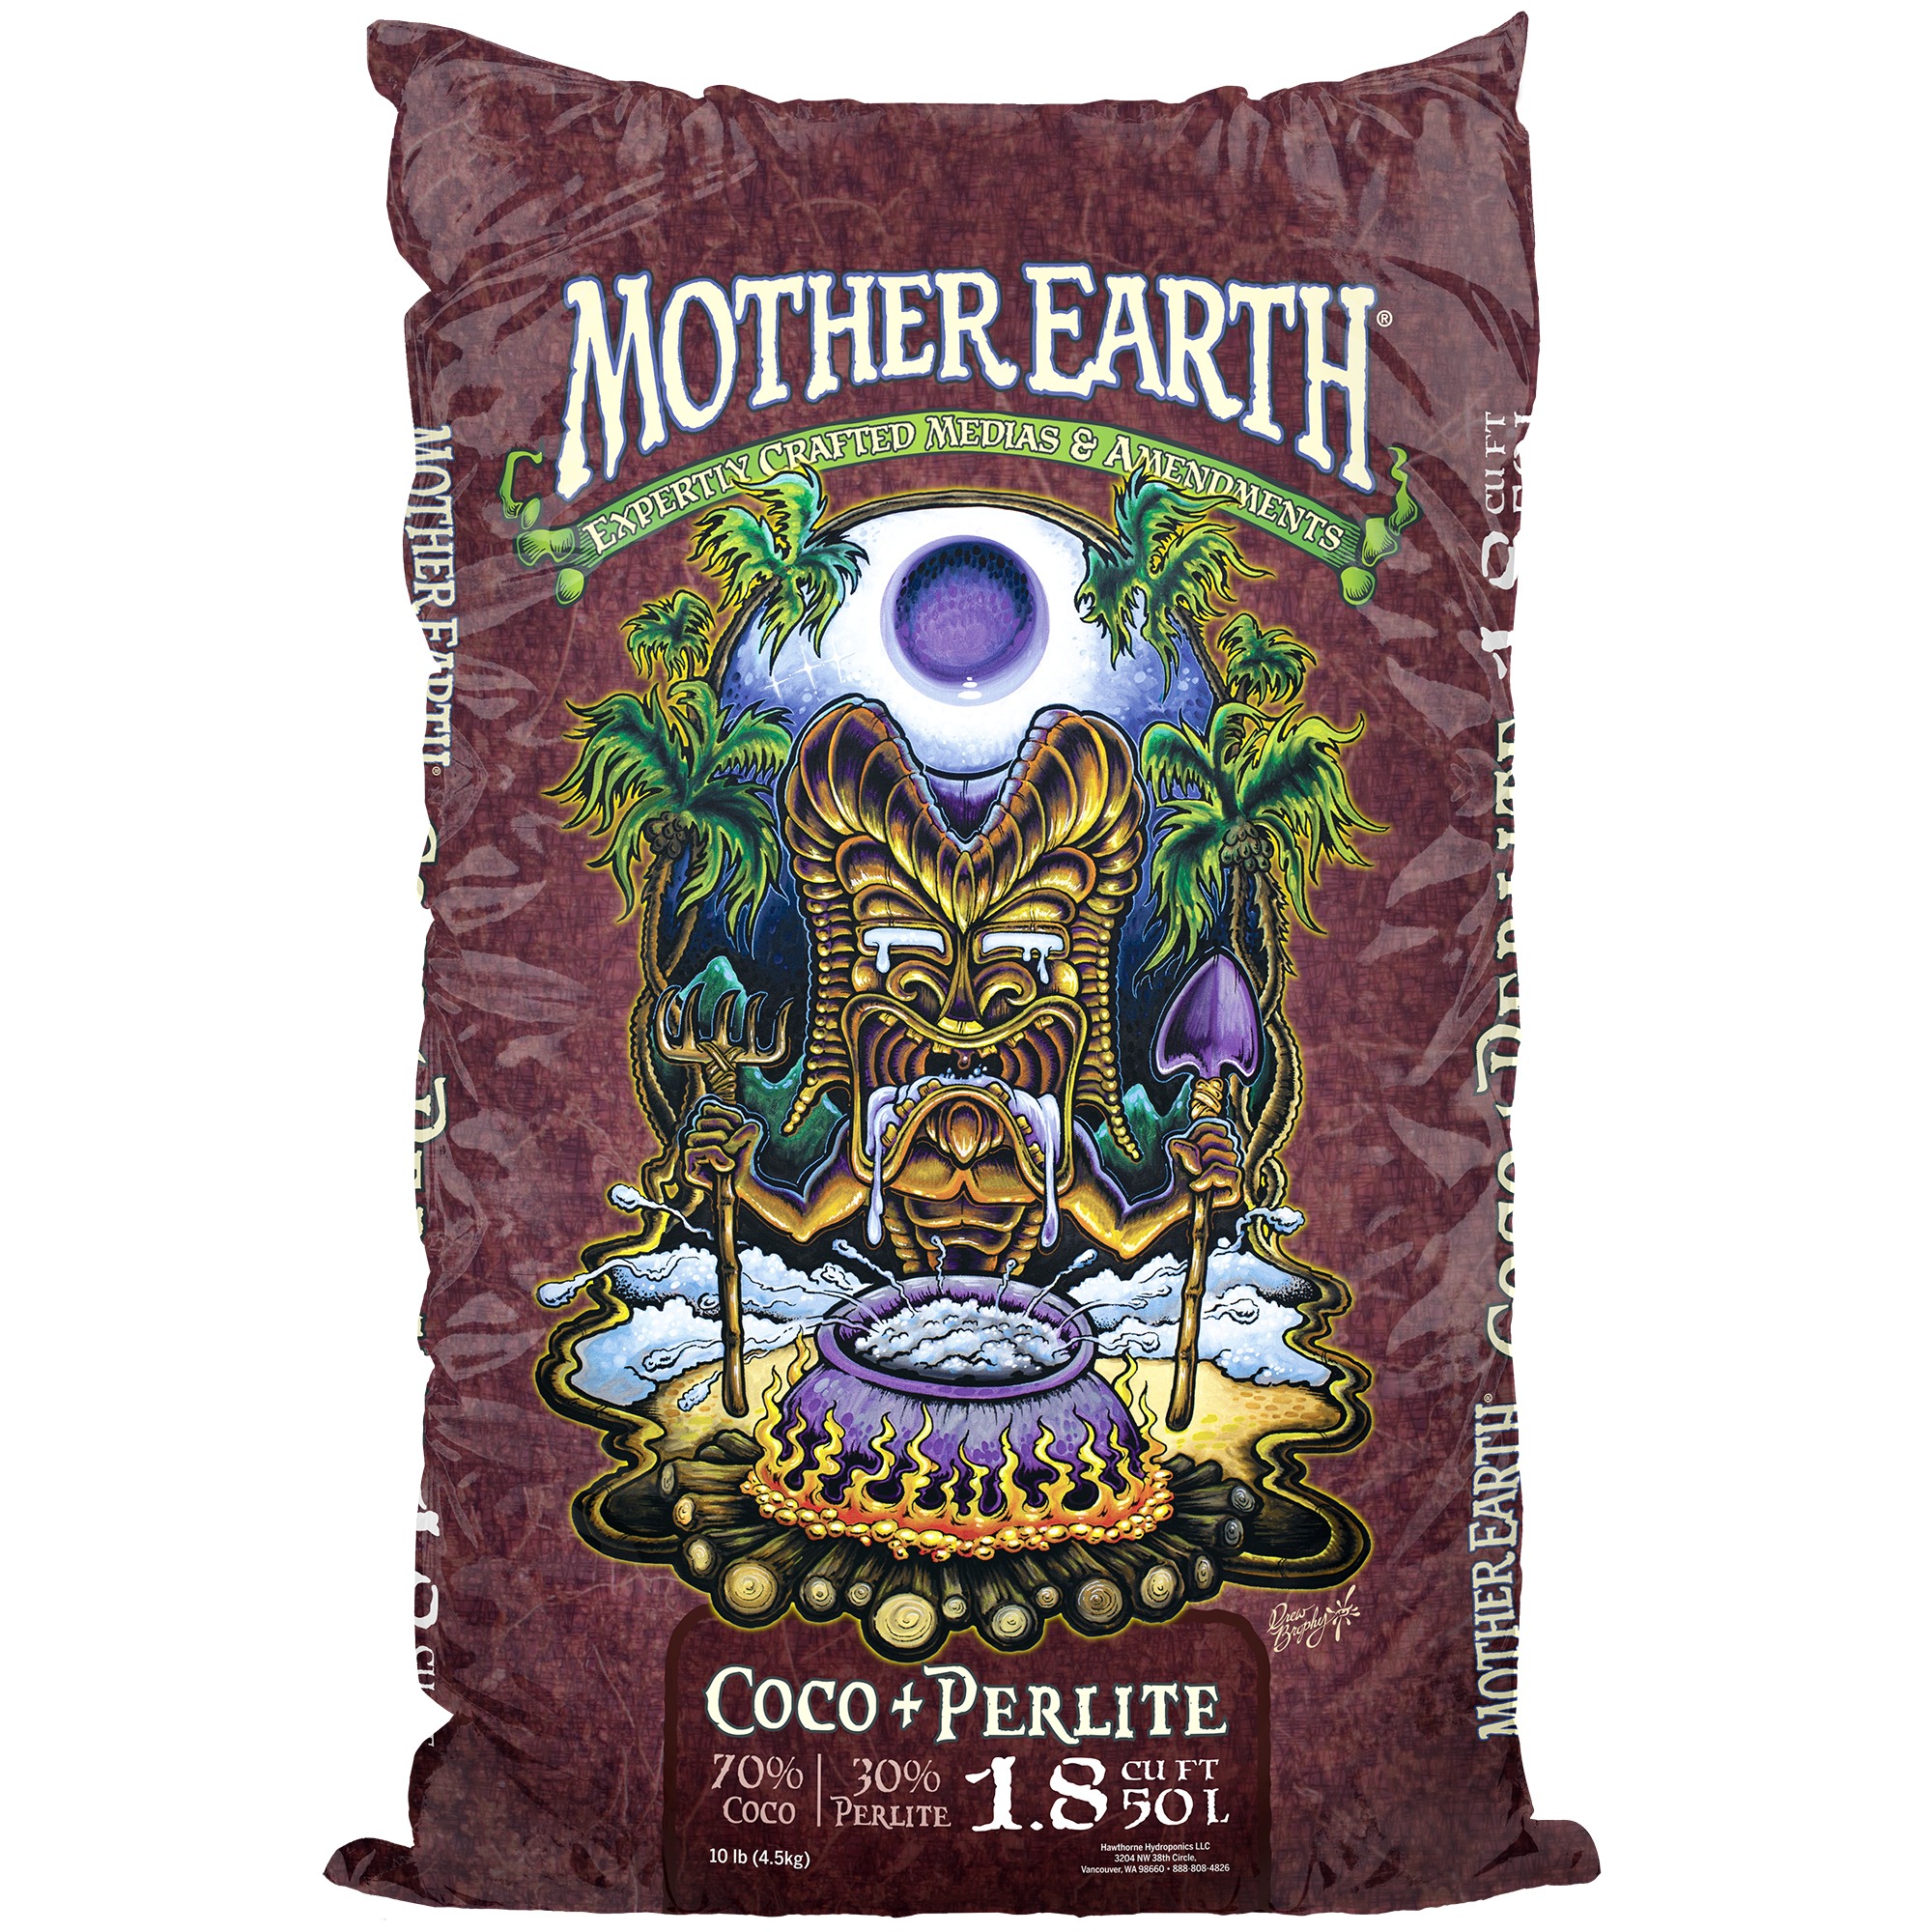 MOTHER EARTH COCO + PERLITE 1.8CF 65/pa